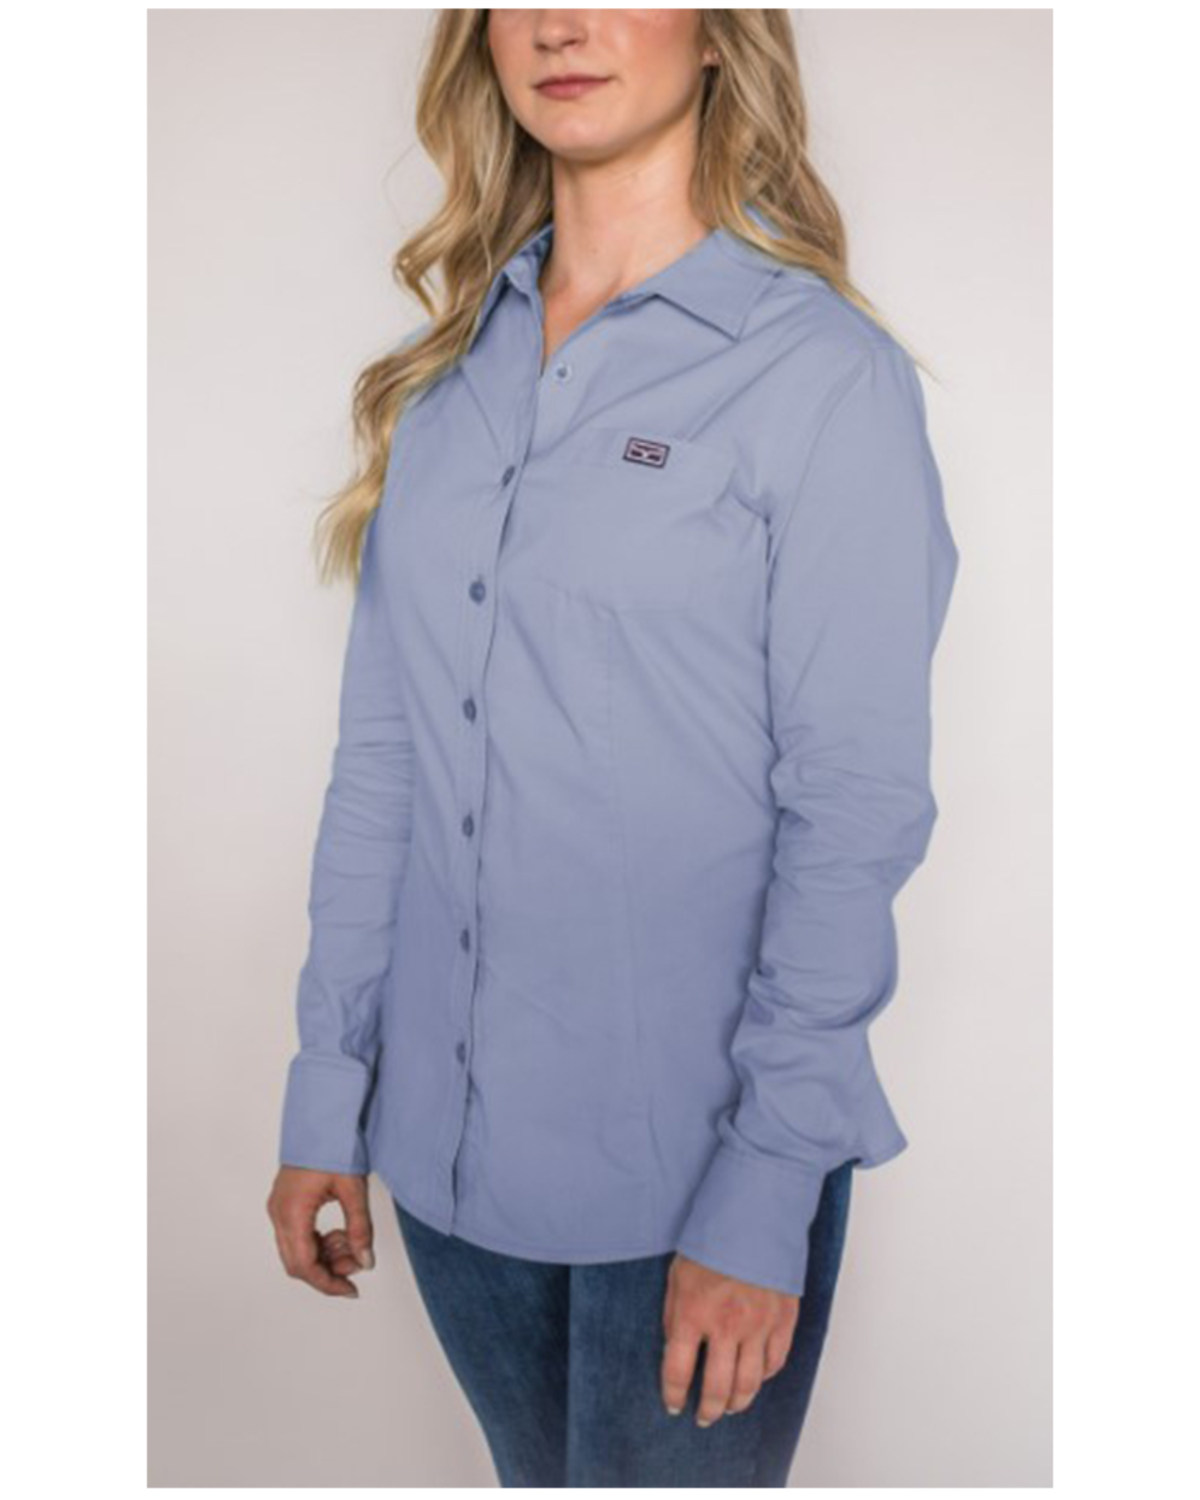 Kimes Ranch Women's Coolmax Linville Long Sleeve Button Down Shirt